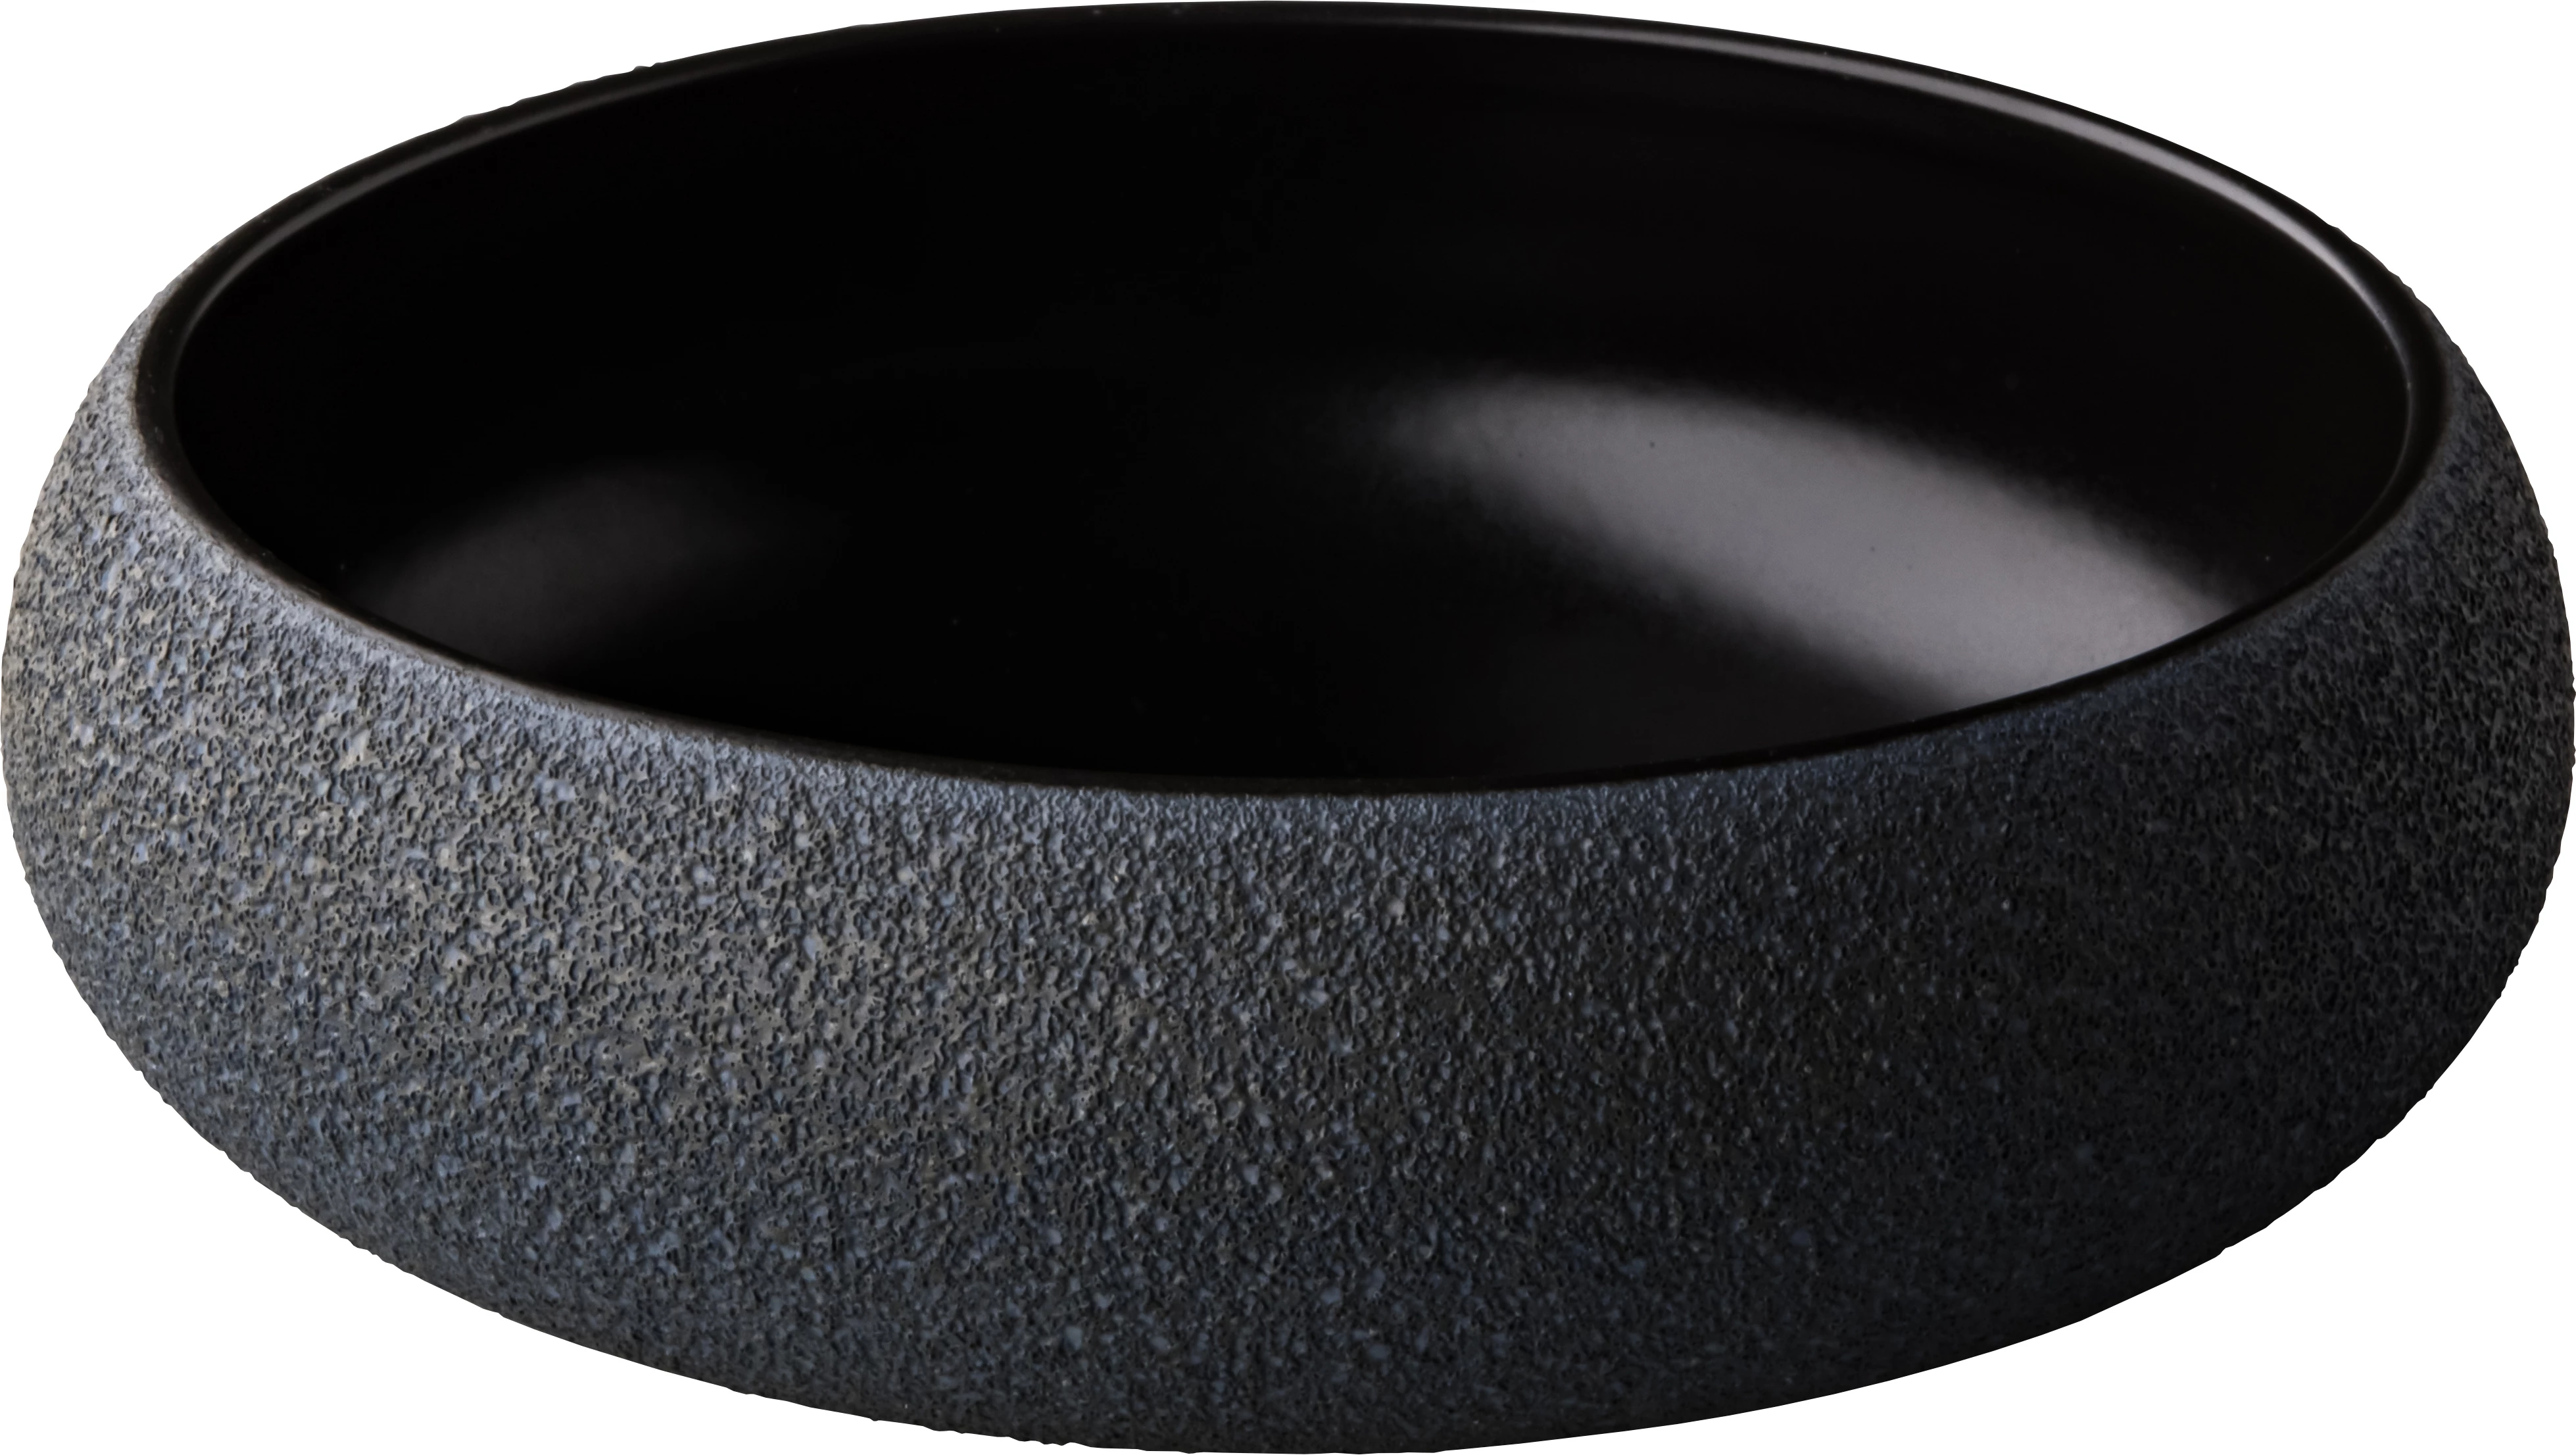 Studio Raw skål, sort, 120 cl, ø19,5 cm